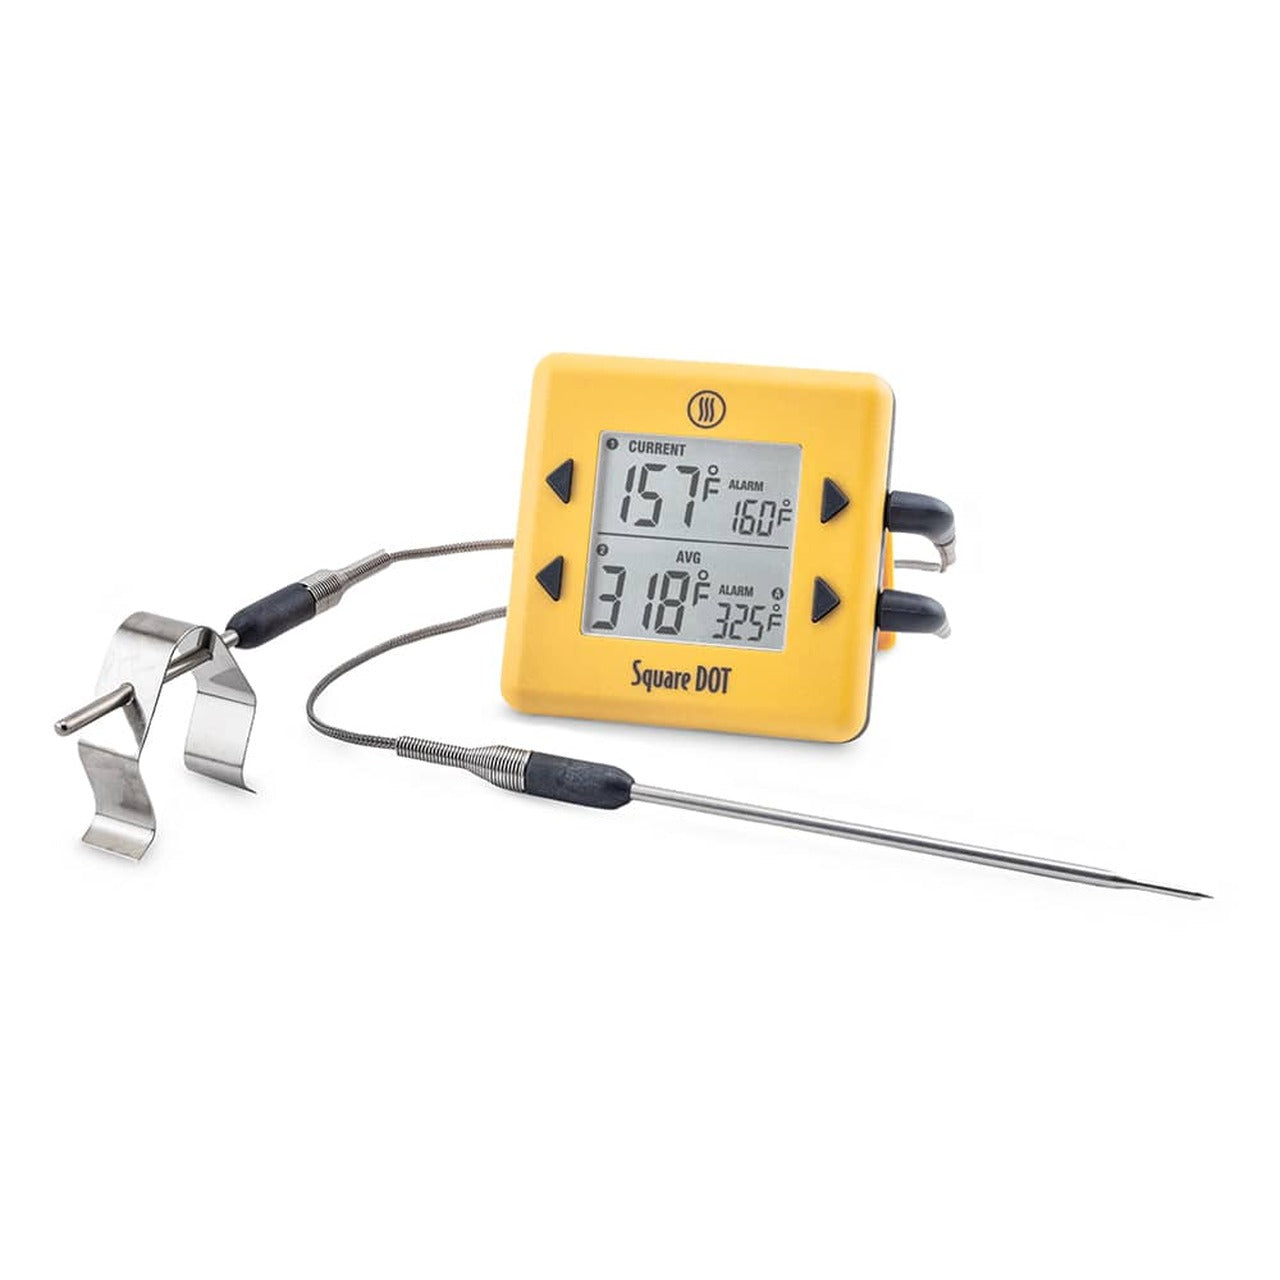 Digital Oven Thermometer - DOT, 70dB Alarm